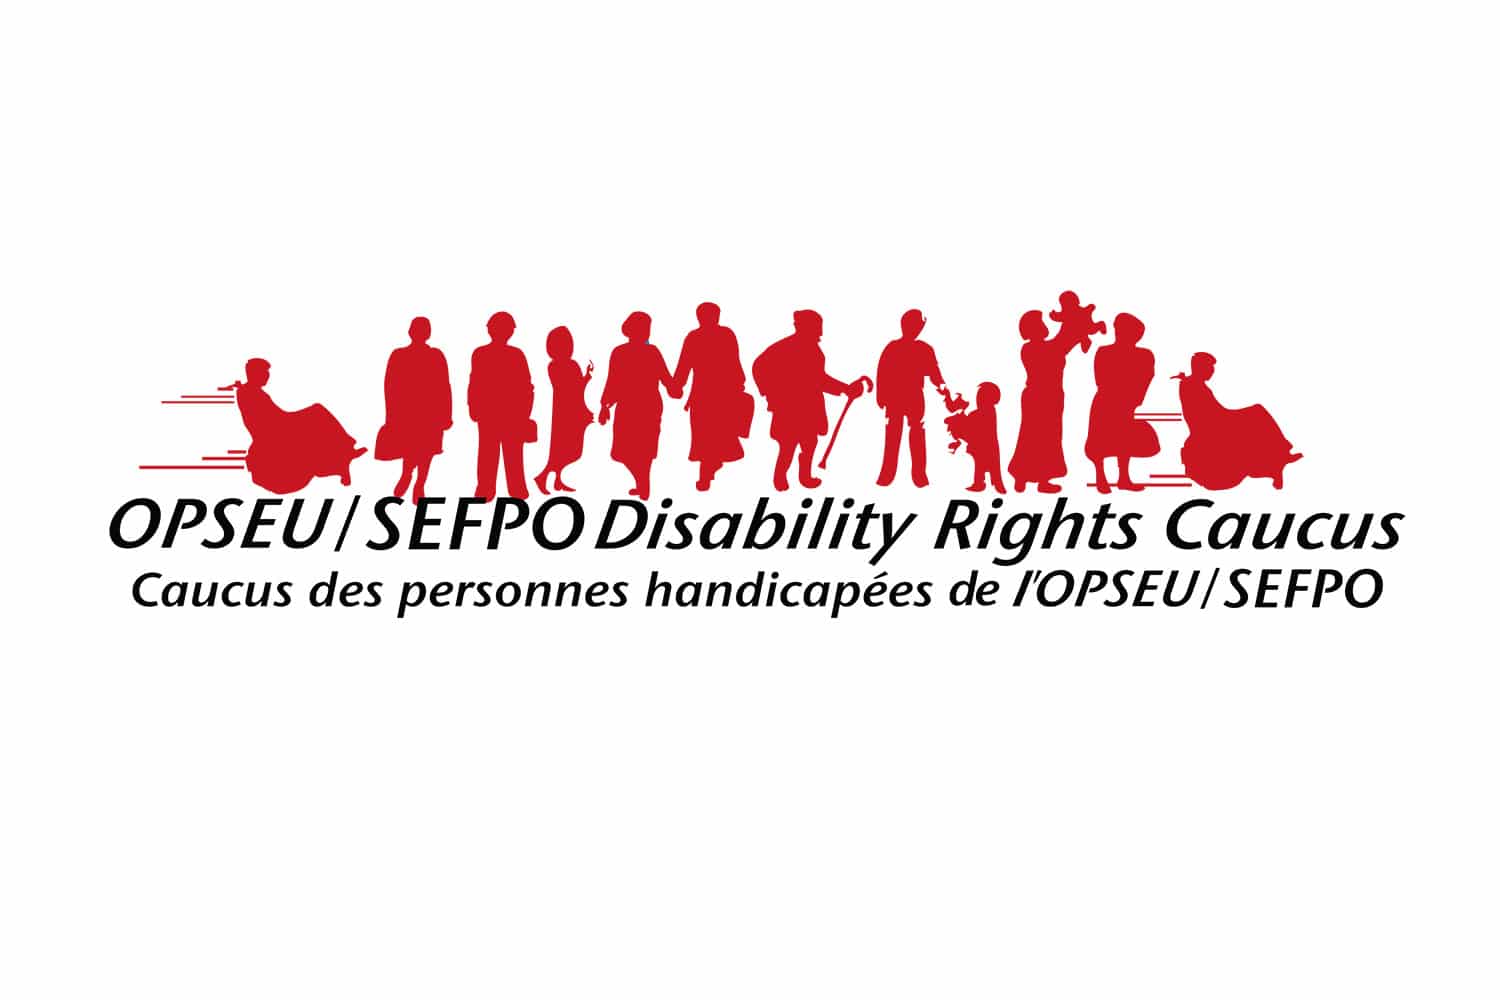 OPSEU disability rights caucus